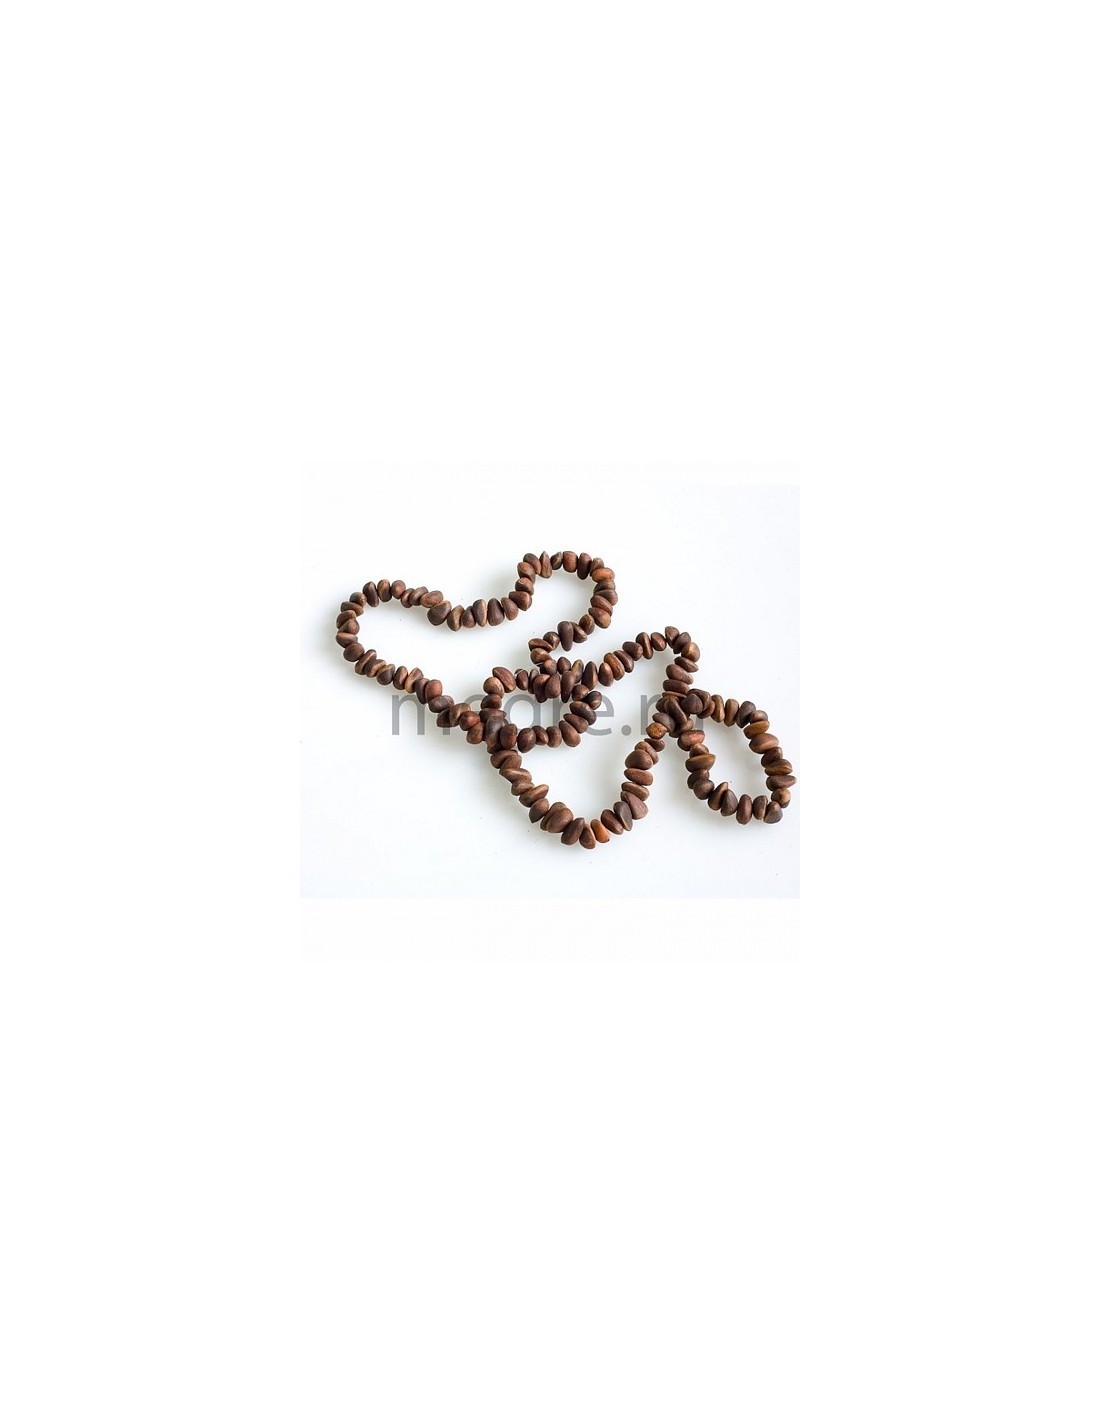 Siberian Cedar String of Beads